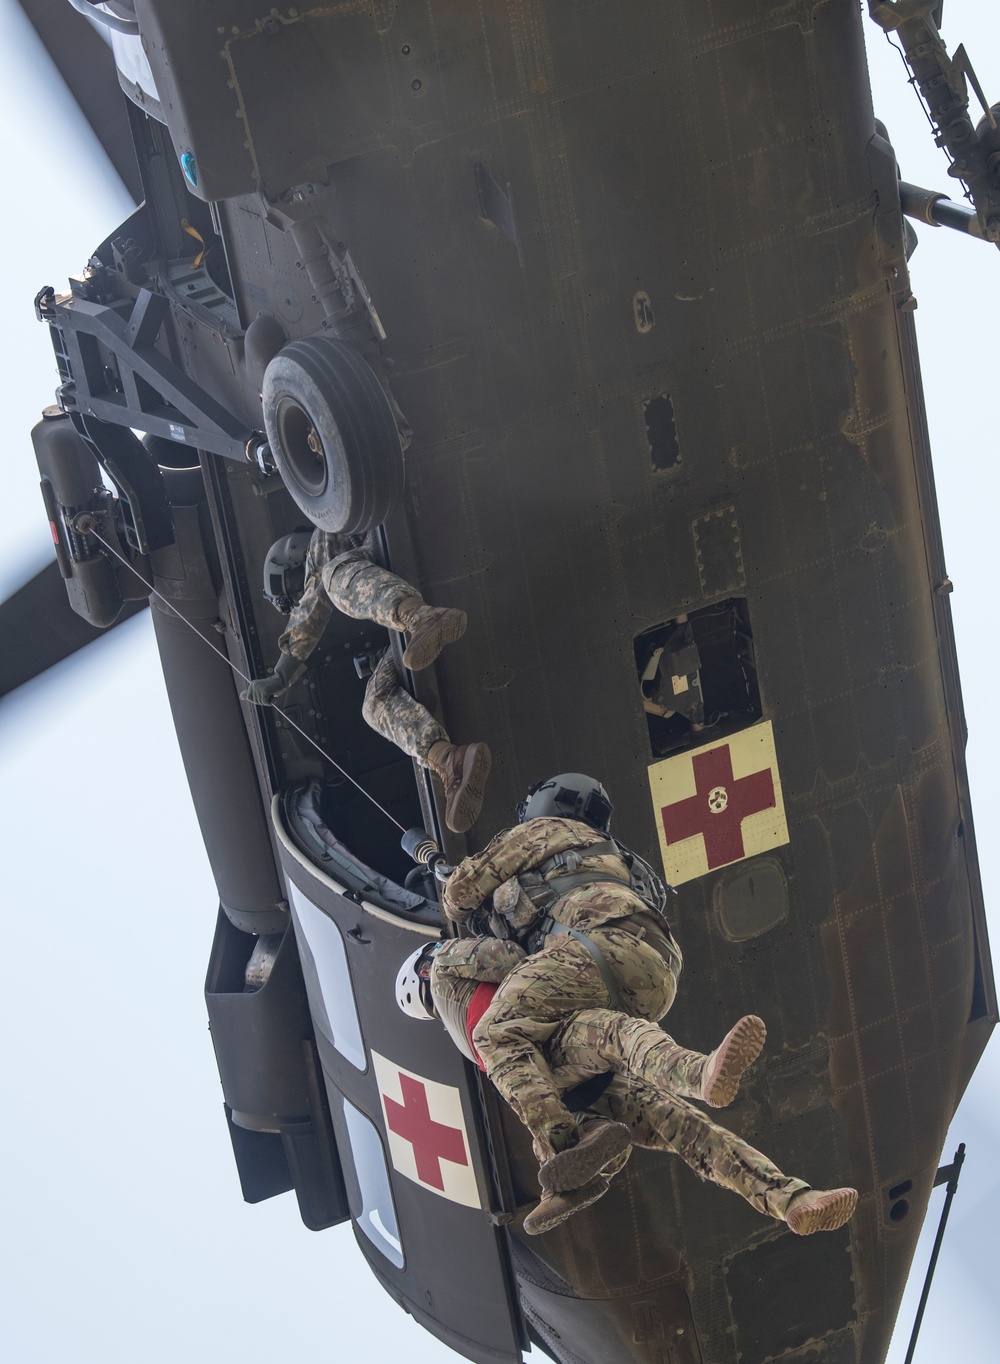 130th Airlift Wing aircrew members practice lifesaving skills